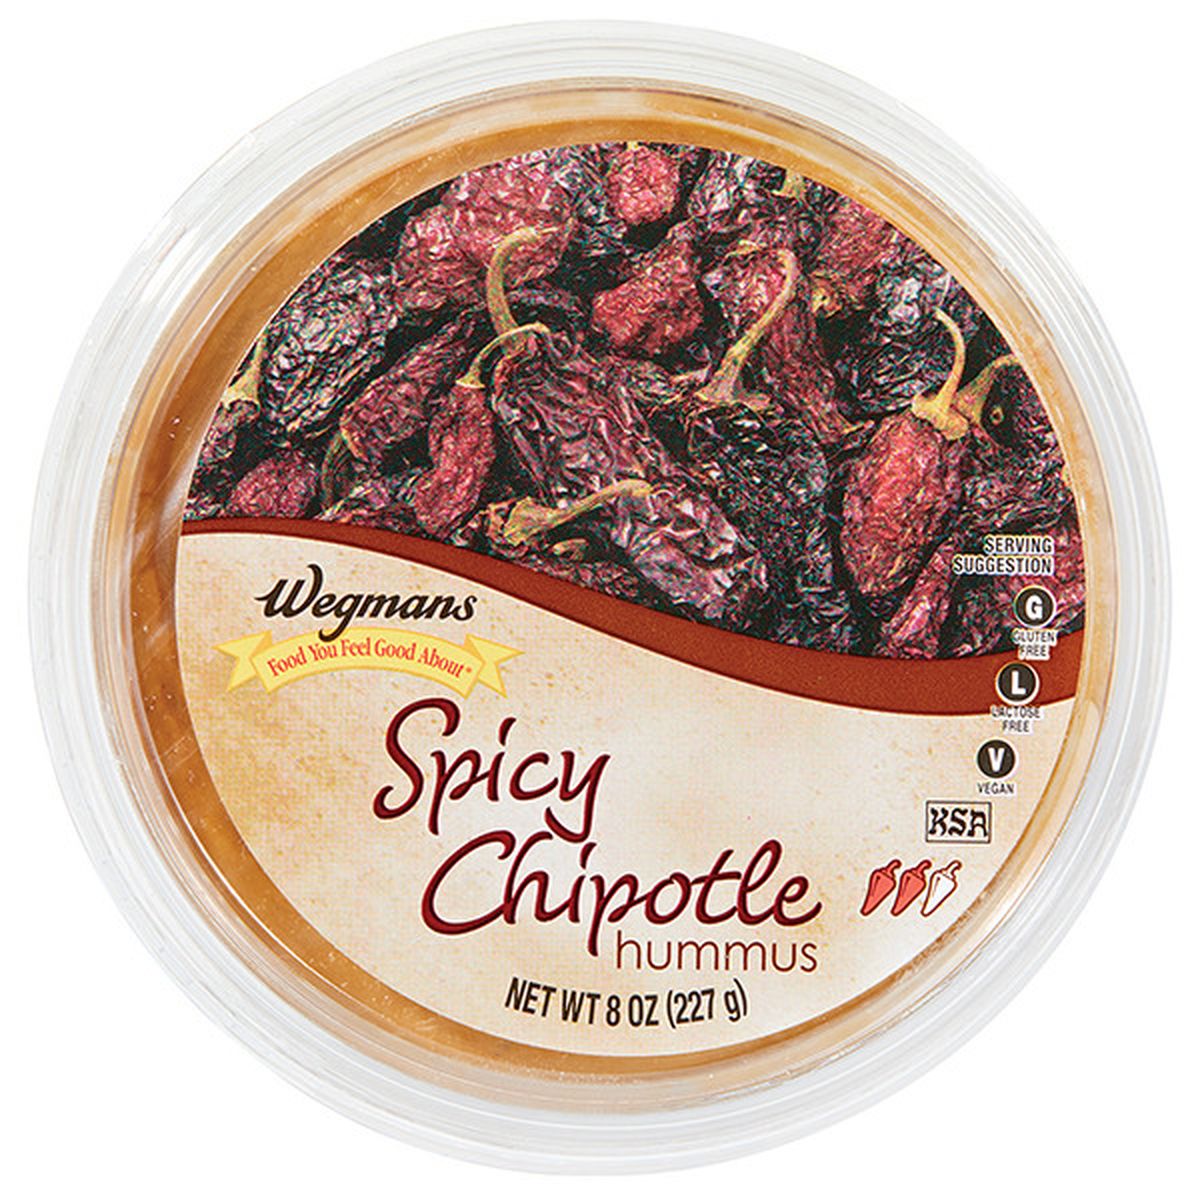 Calories in Wegmans Spicy Chipotle Hummus